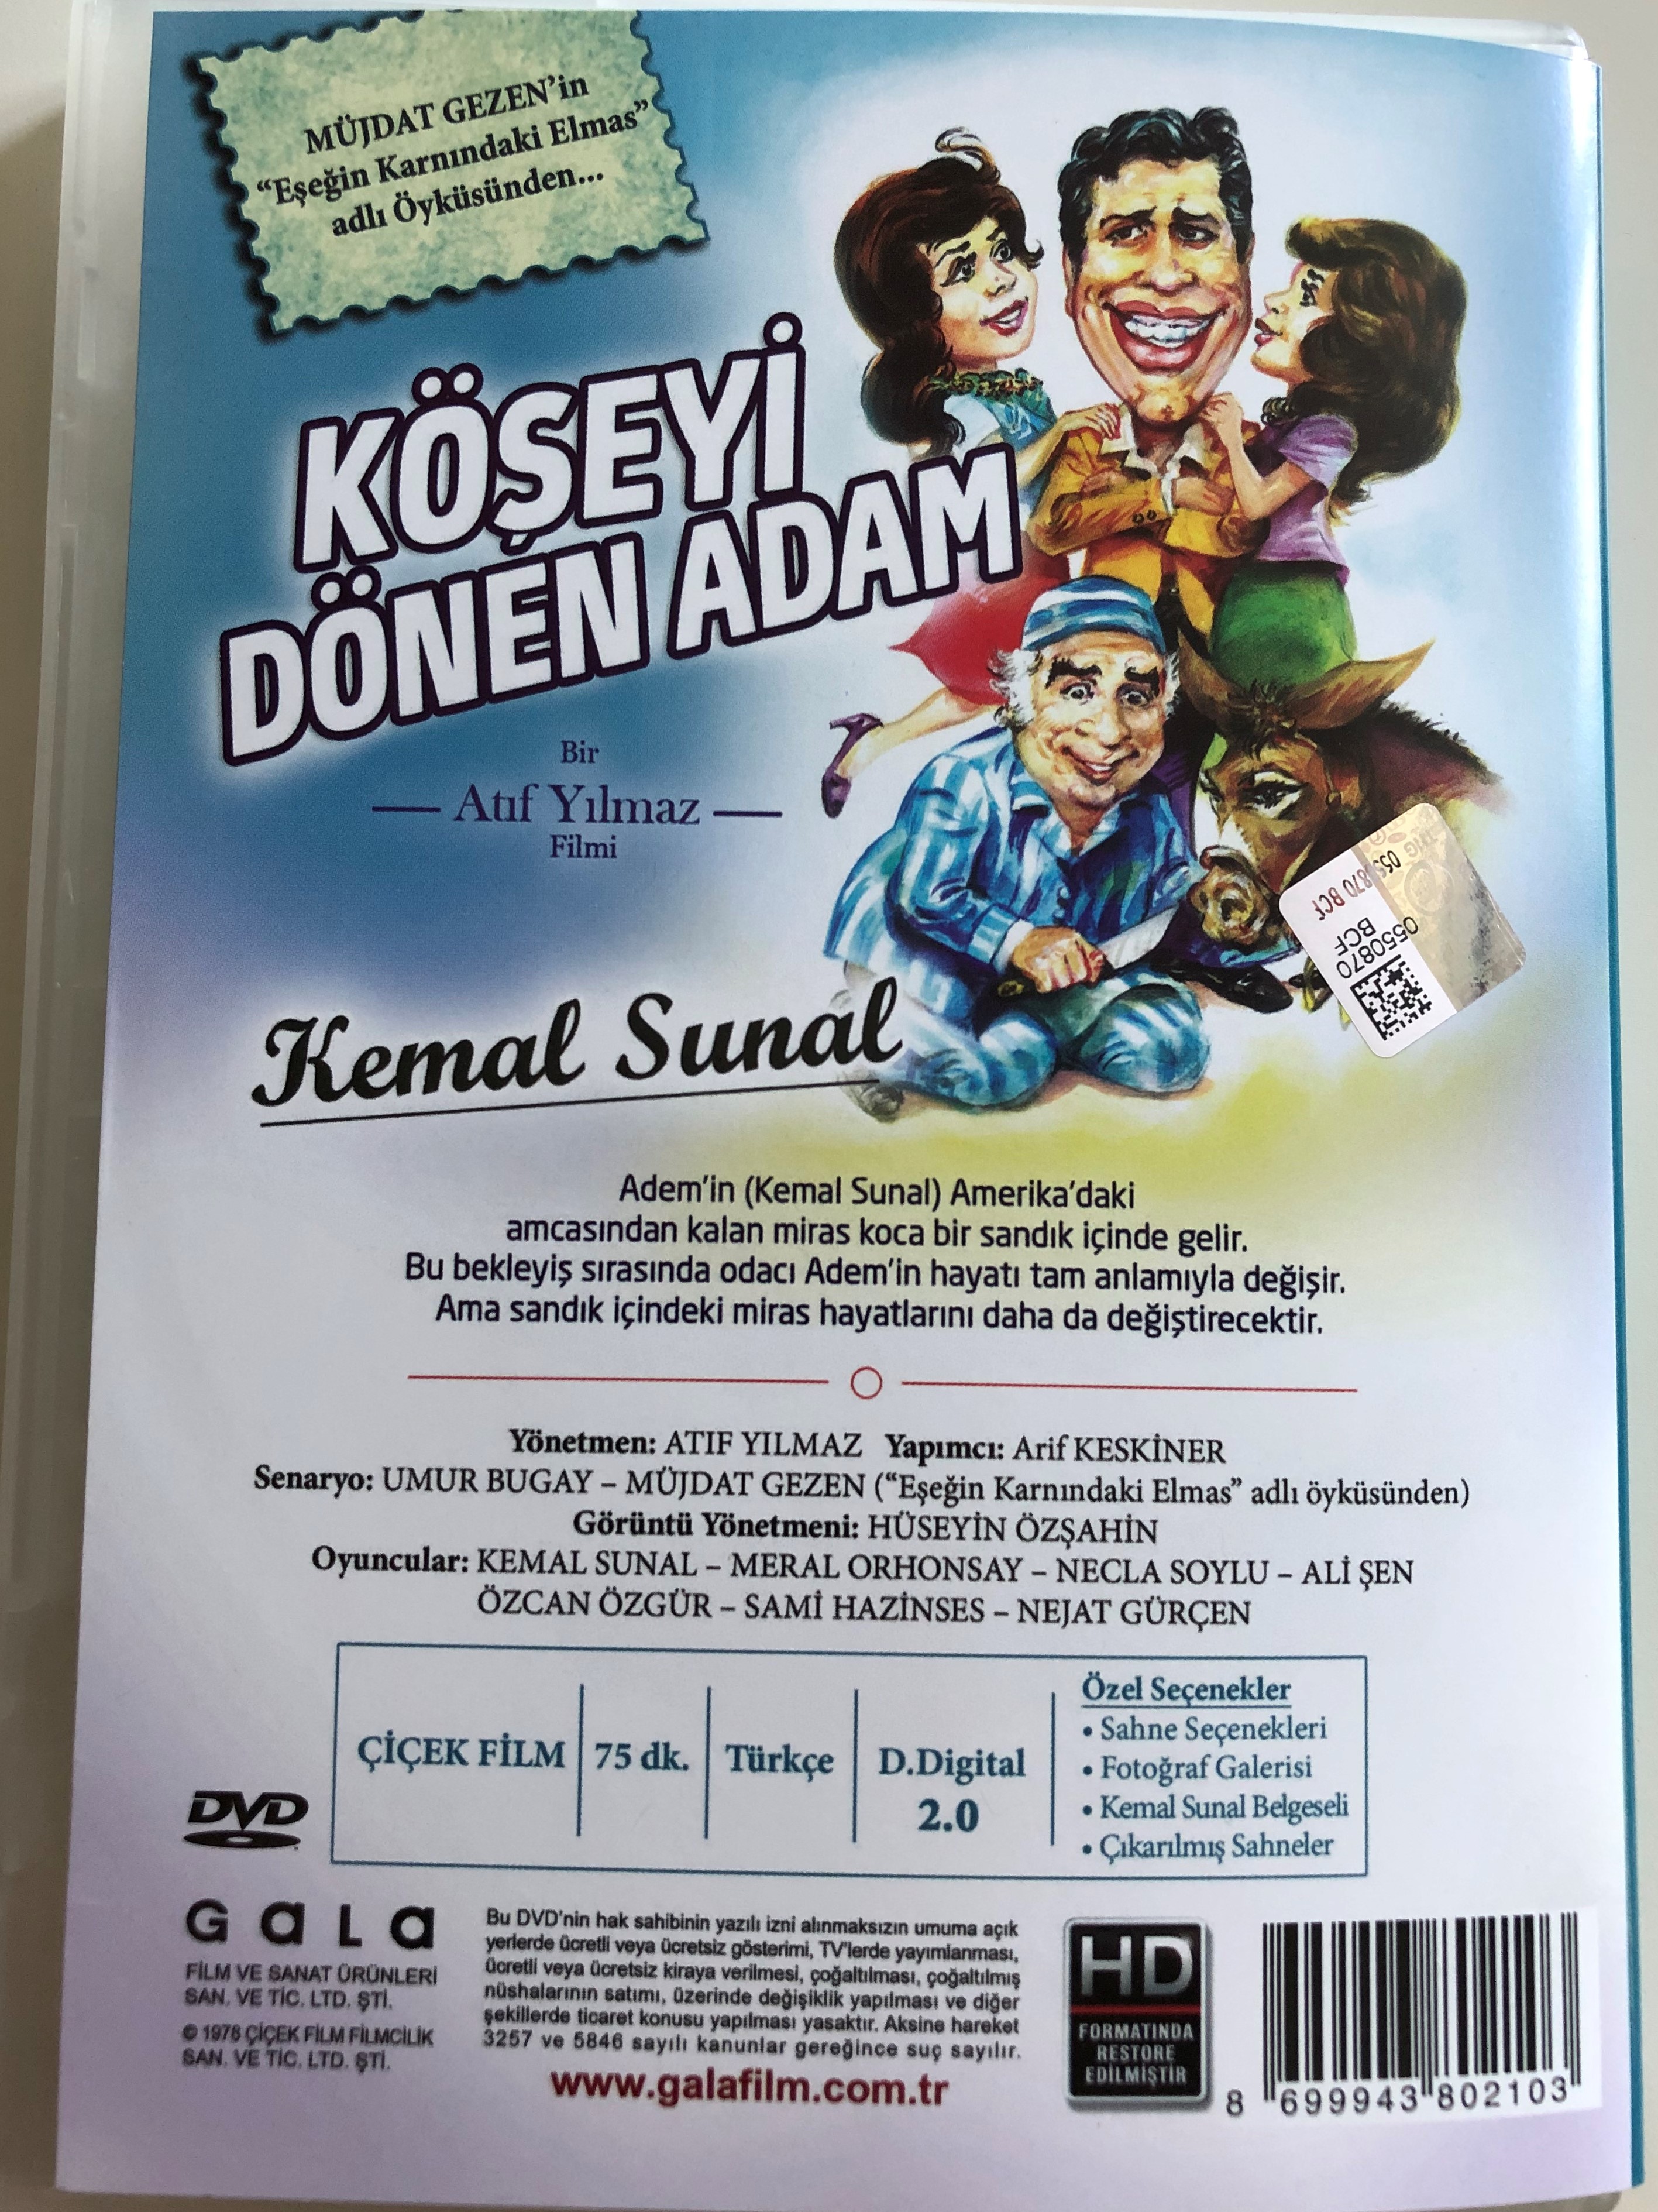 k-seyi-d-nen-adam-dvd-1978-directed-by-at-f-y-lmaz-starring-kemal-sunal-meral-orhonsay-ali-en-2-.jpg